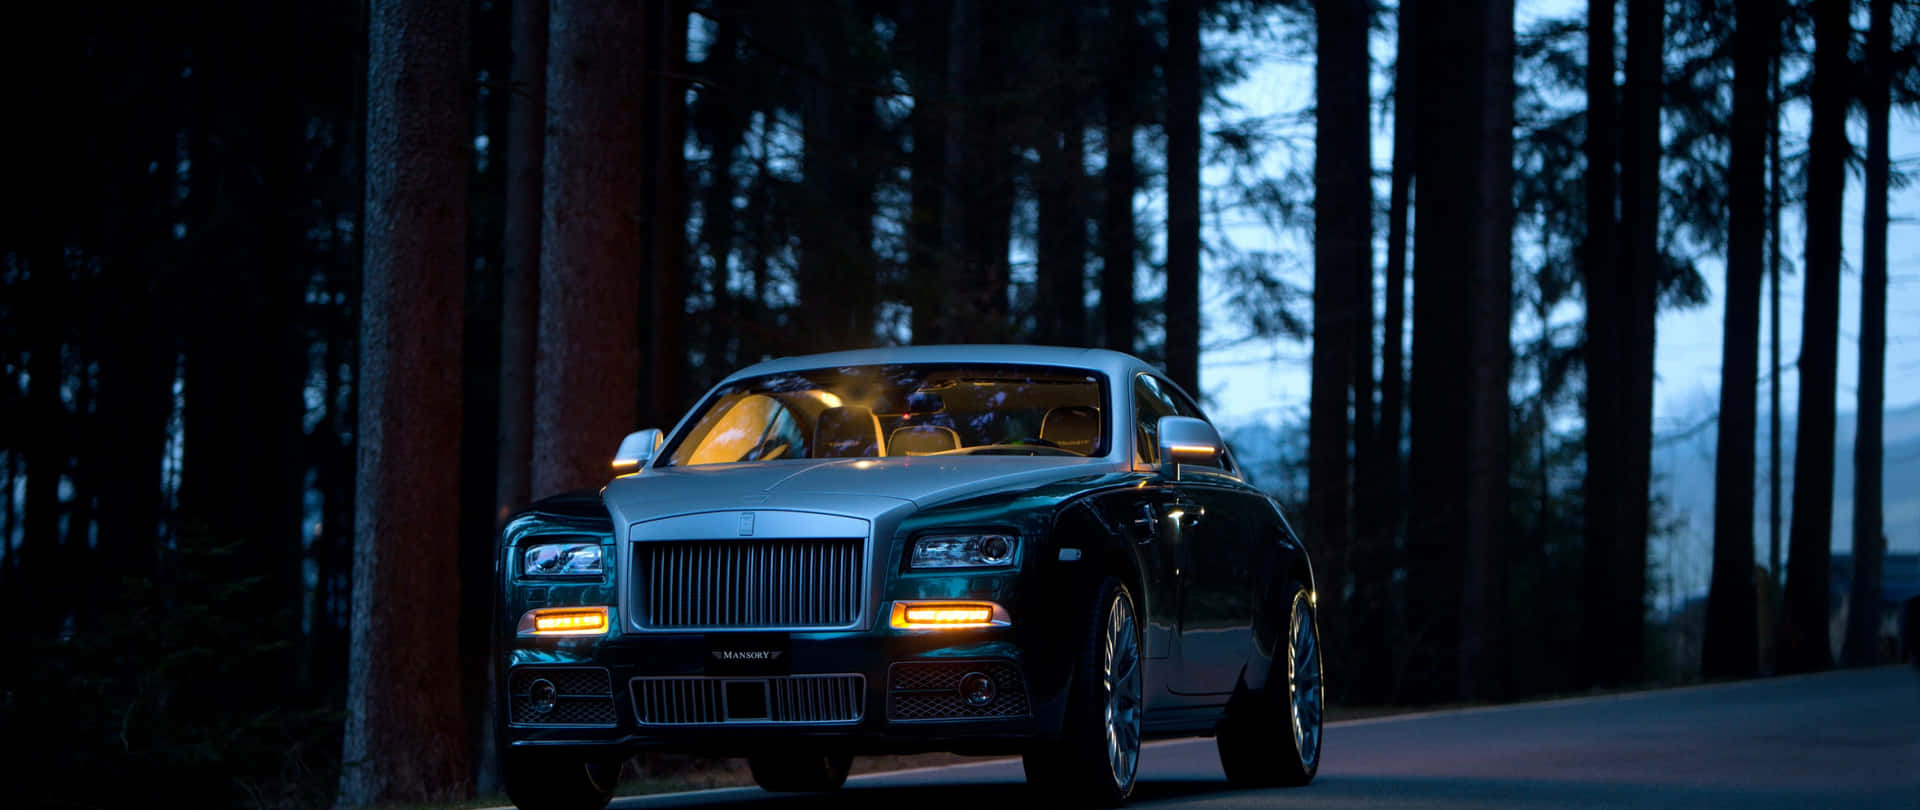 Caption: Luxurious Rolls Royce Emblem On A Classic Model